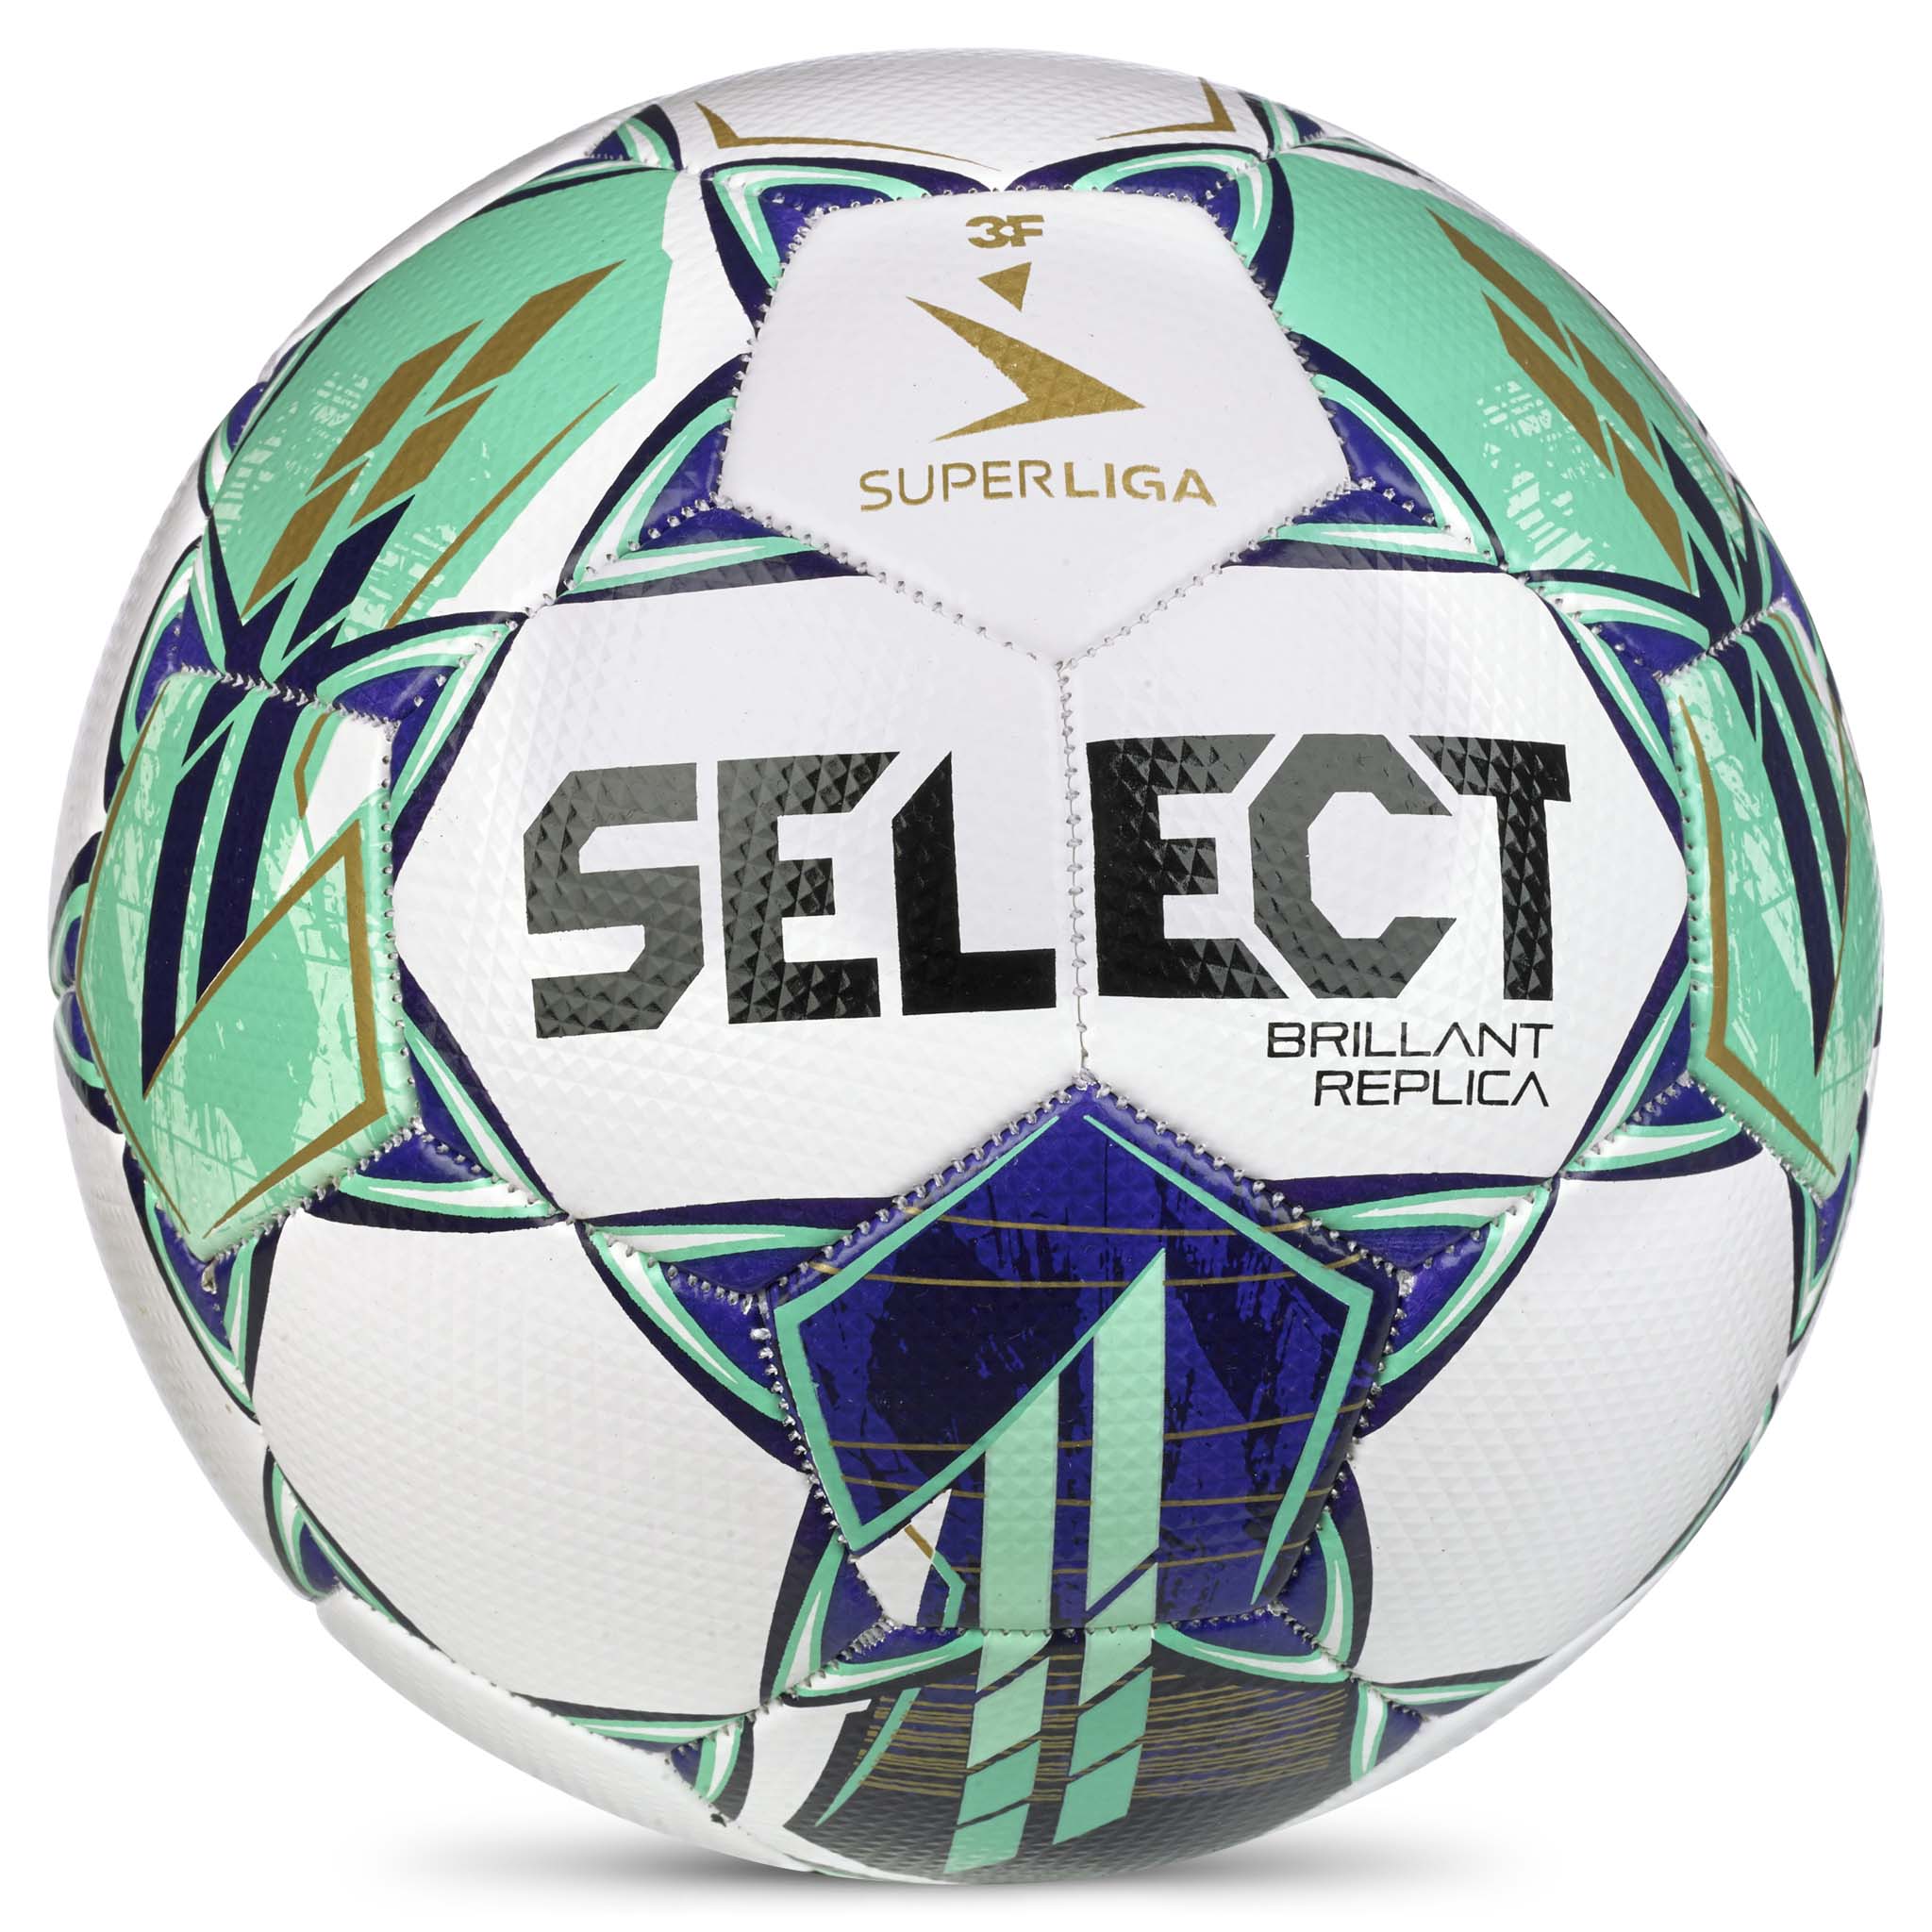 Fodbold - Brillant Replica 3F Superliga #farve_hvid/grøn